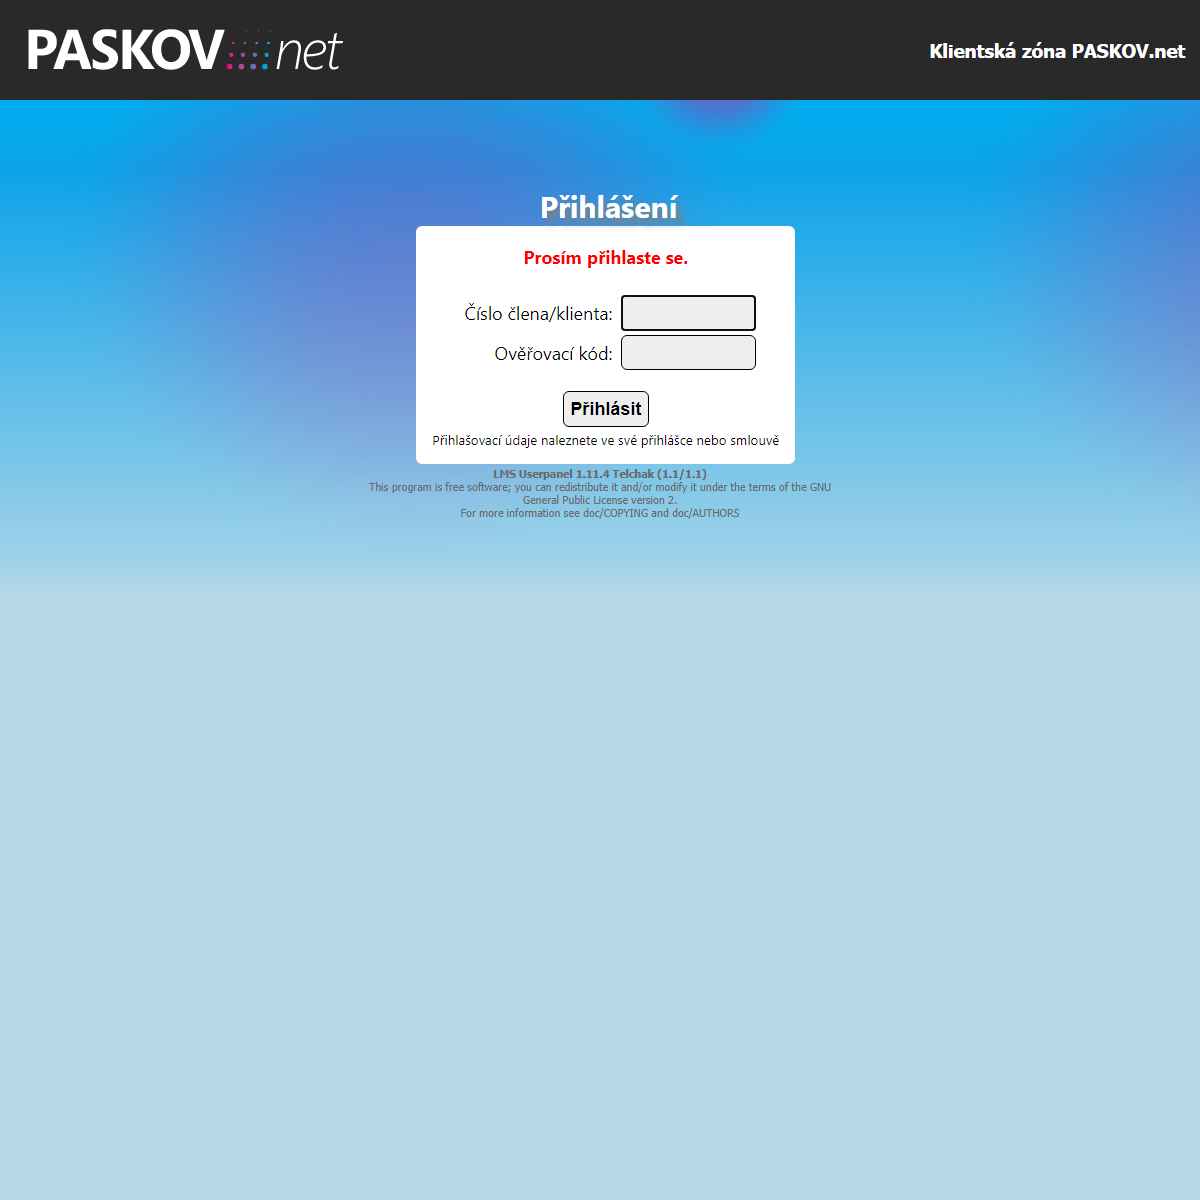 A complete backup of http://uzivatel.paskov.net/